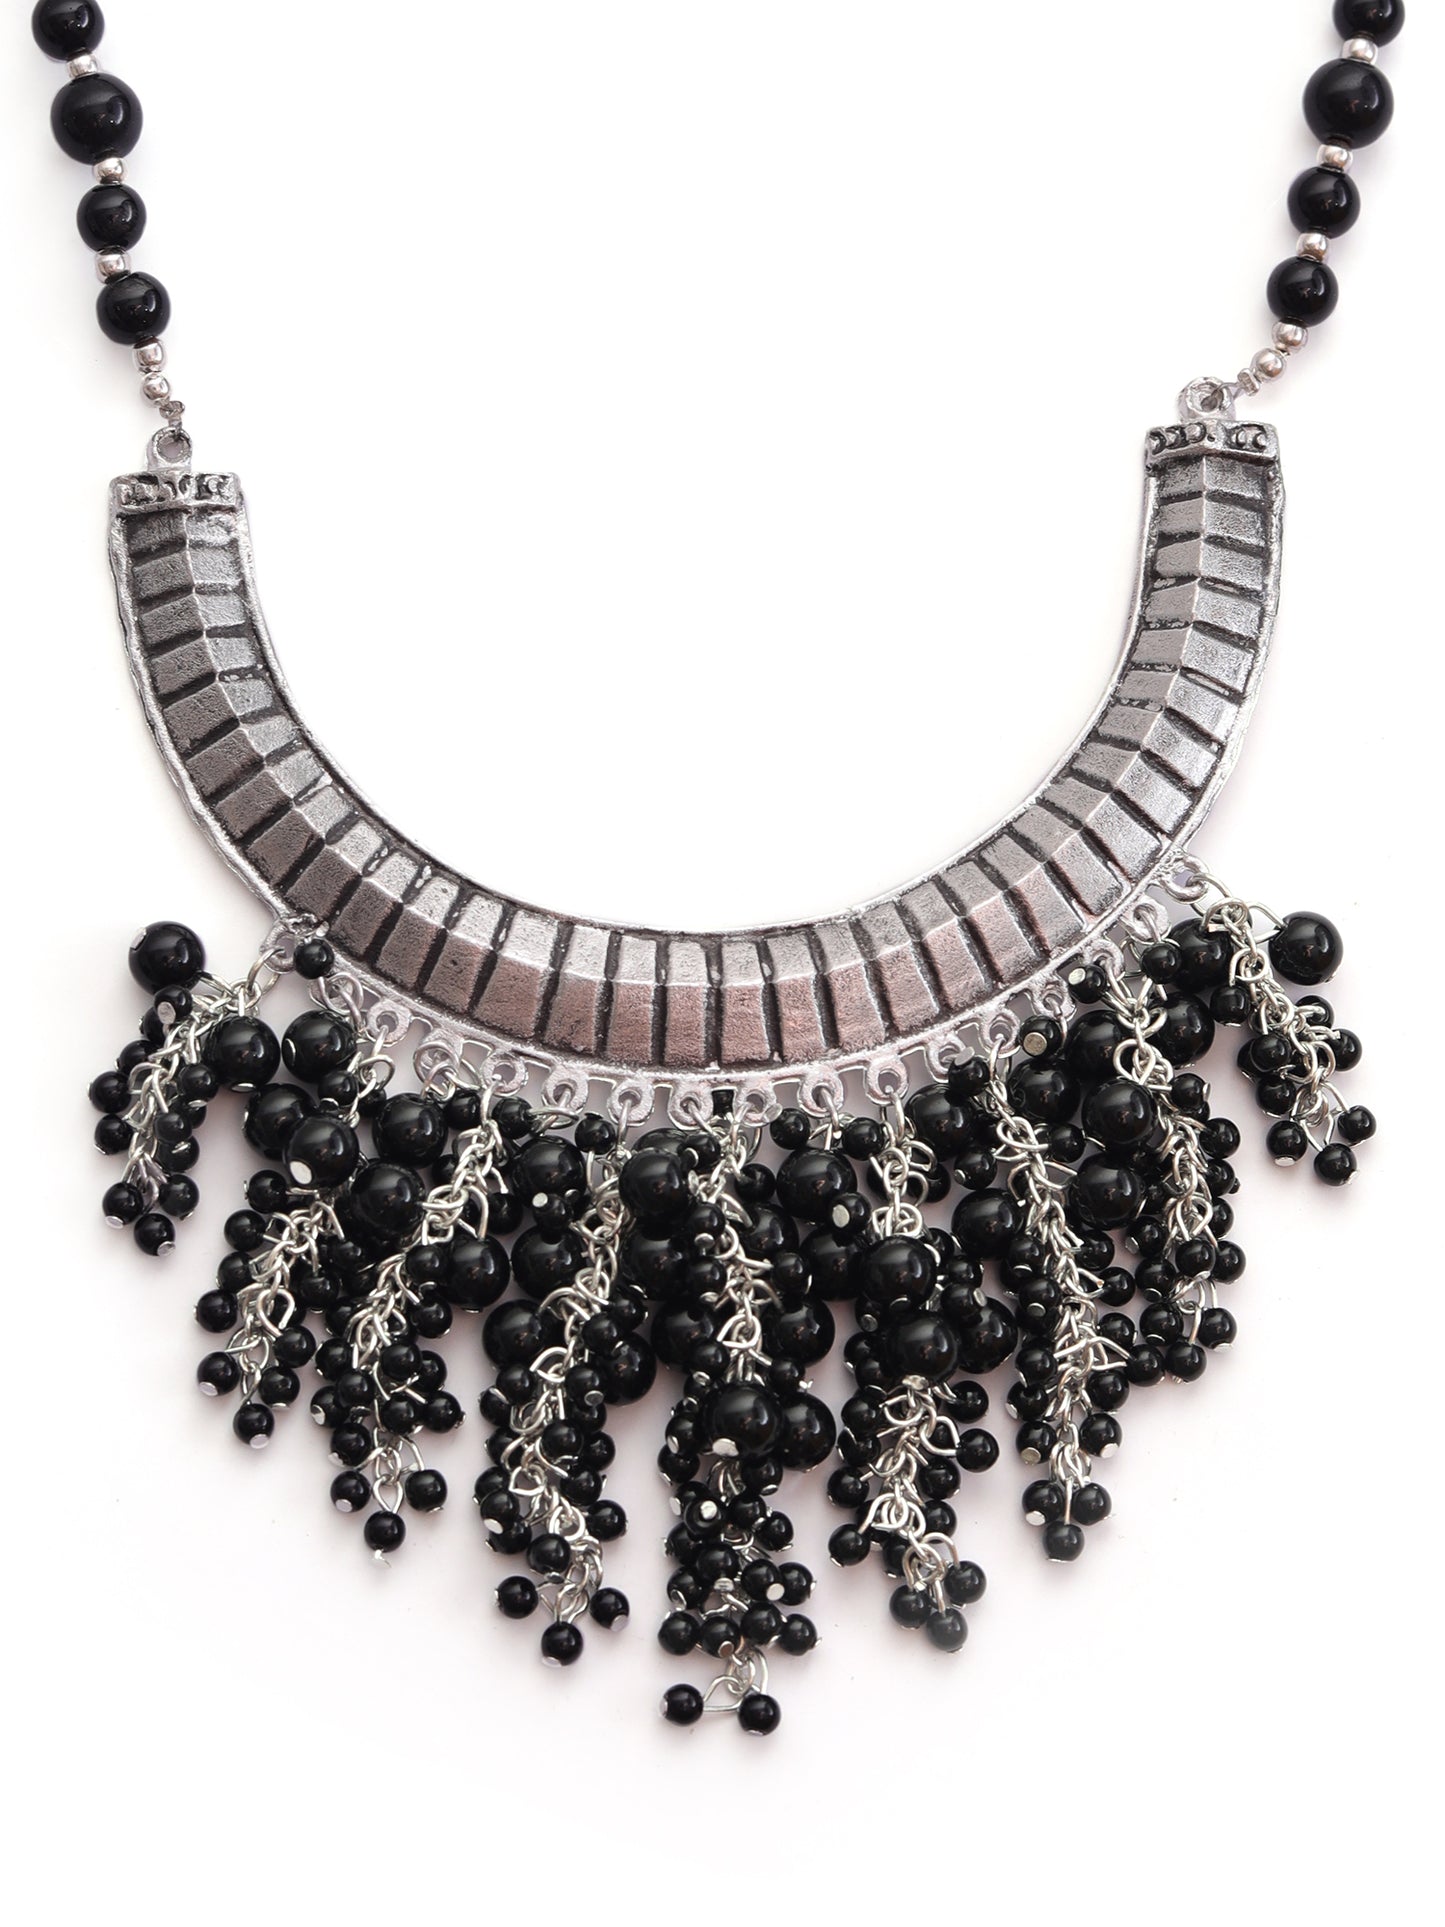 The Hasli Black Beaded Panicle Necklace